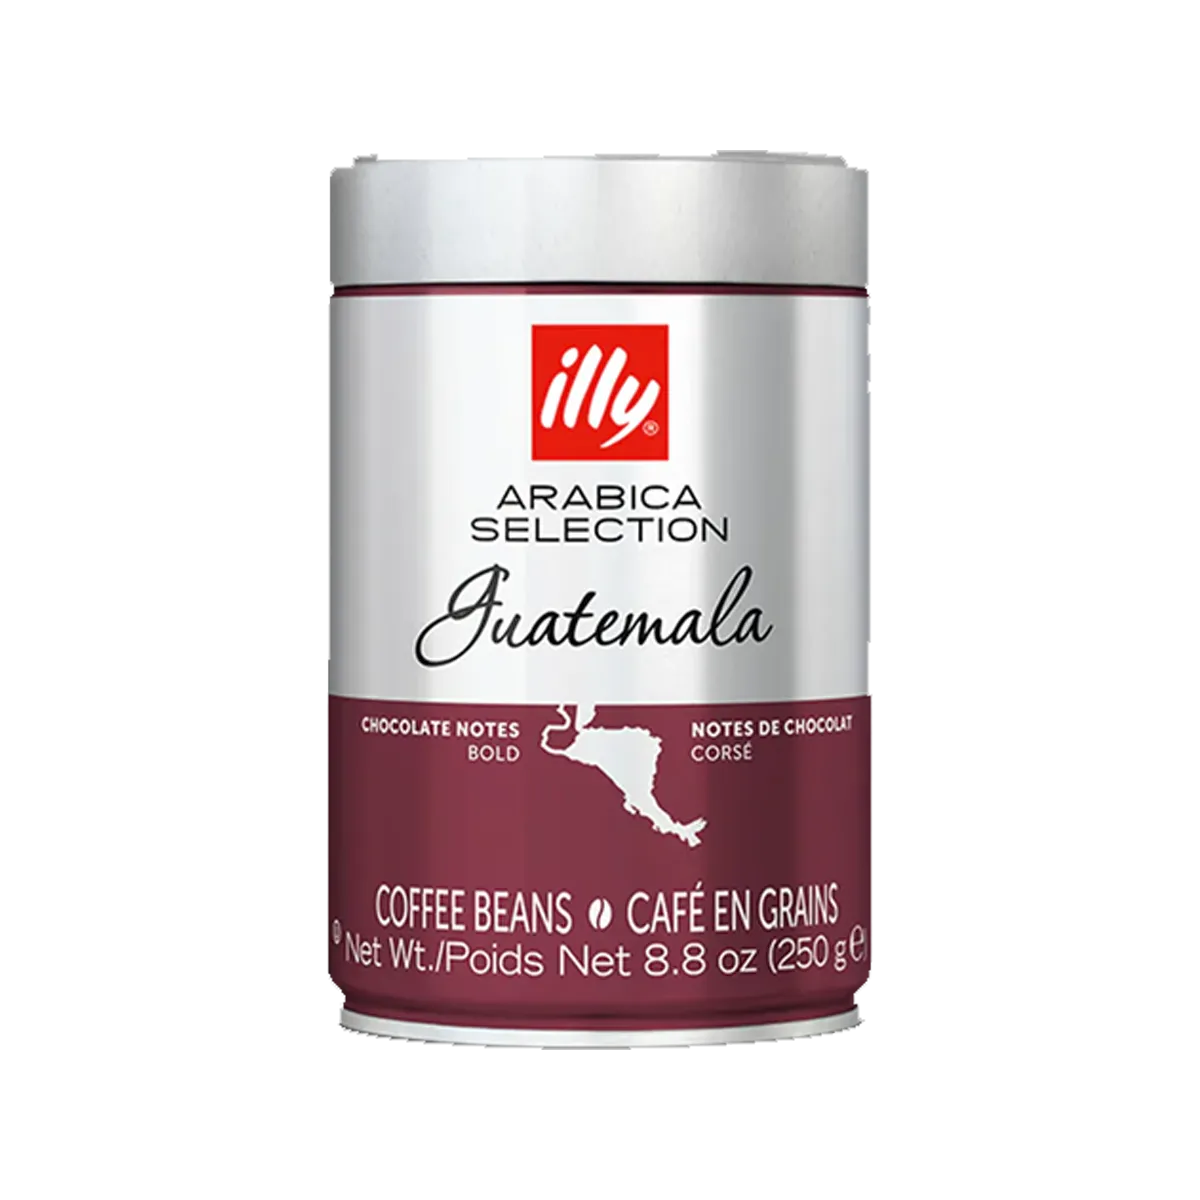 illy Arabica Selection Guatemalan Coffee Bean 250g